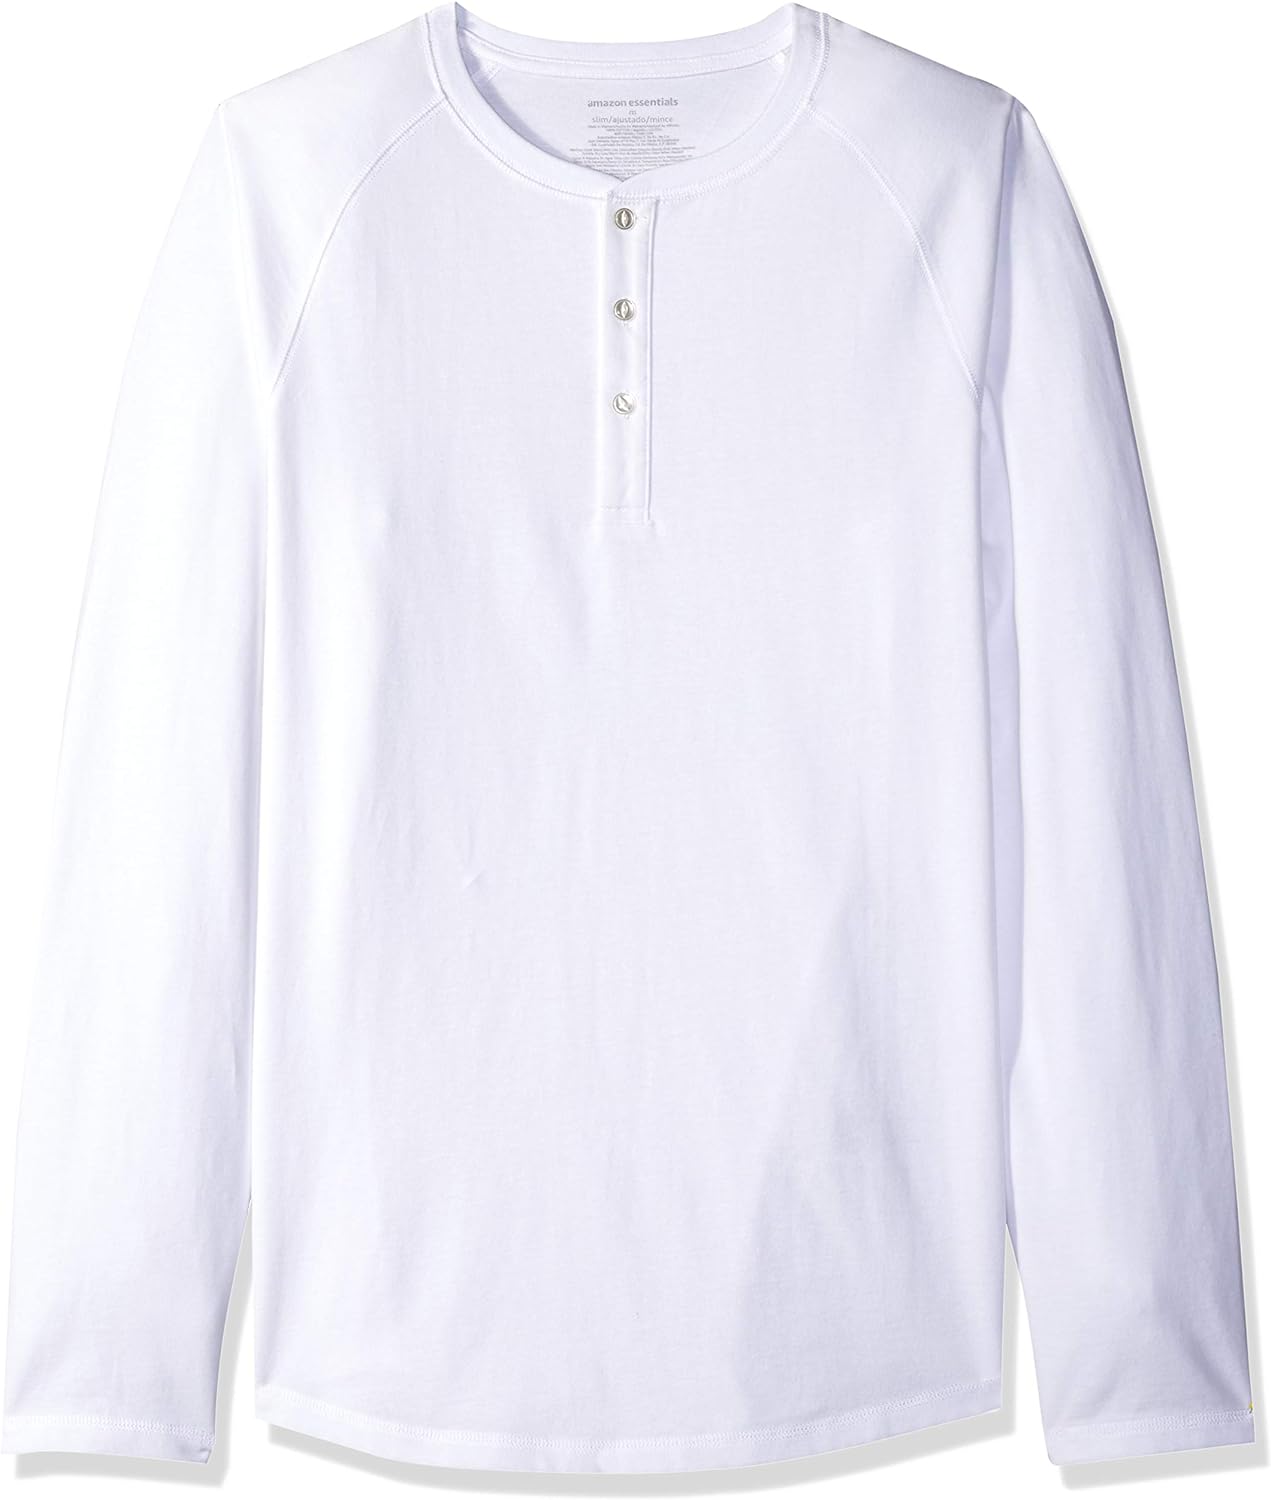 Essentials Mens Slim-Fit Long-Sleeve Henley Shirt